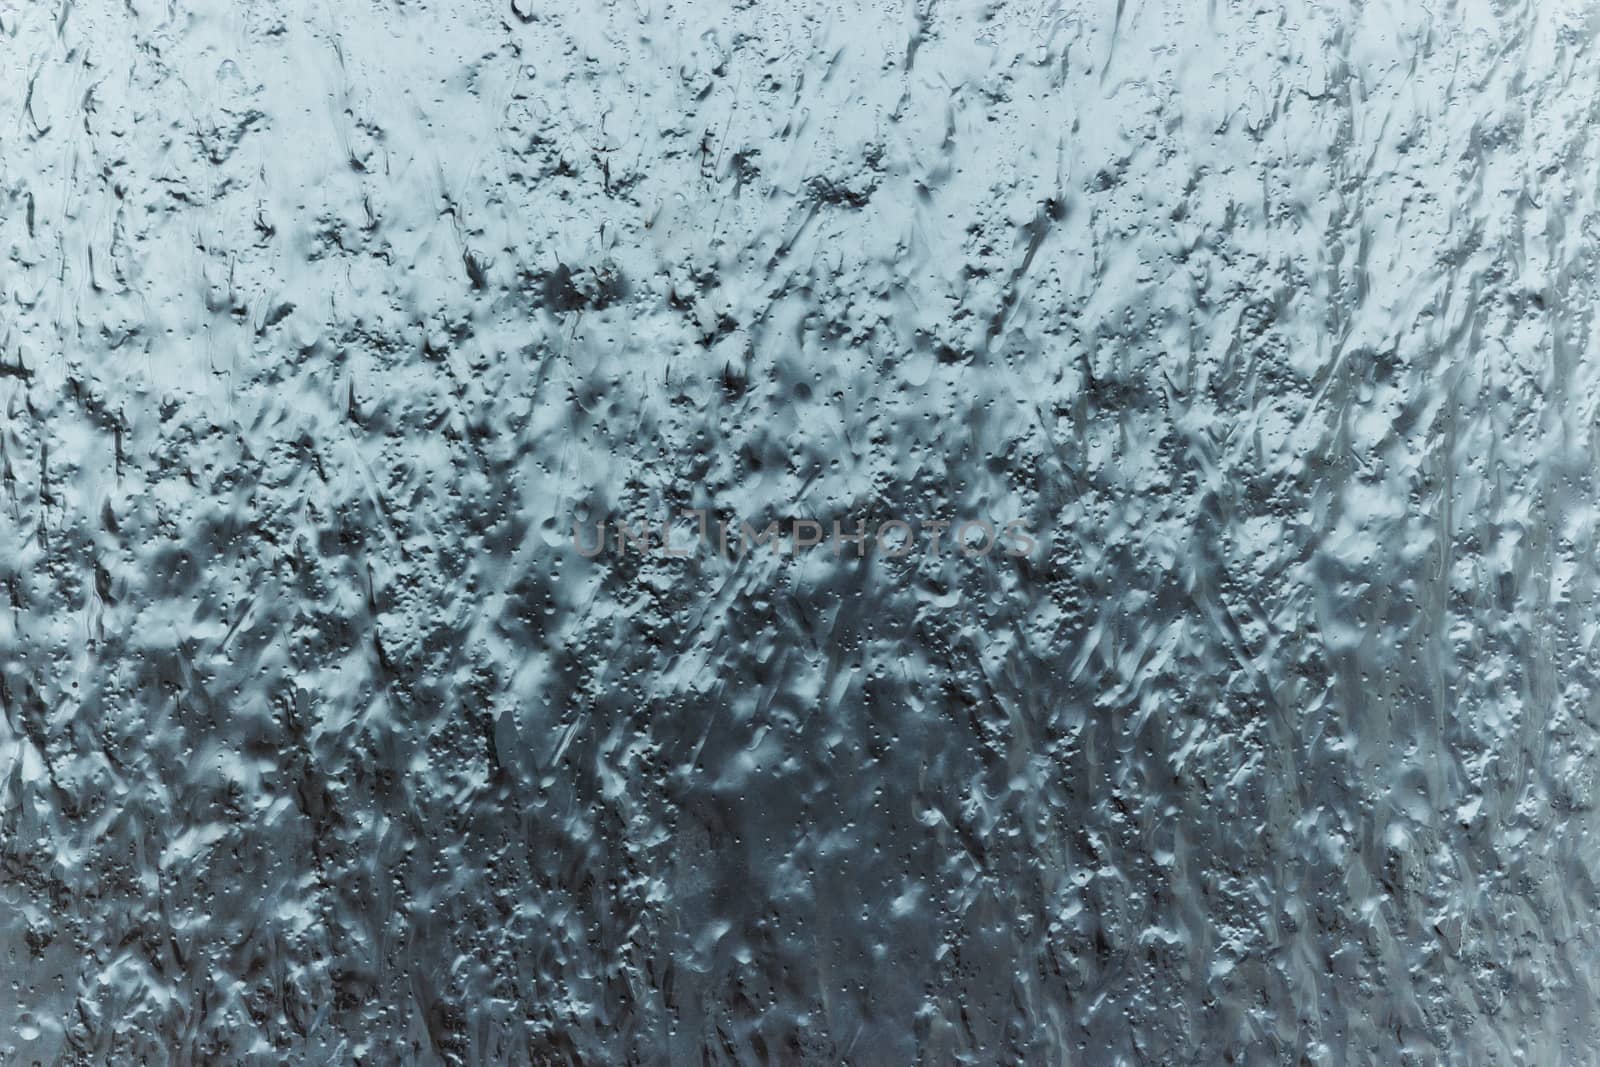 Splashes of ice frozen rain on glass